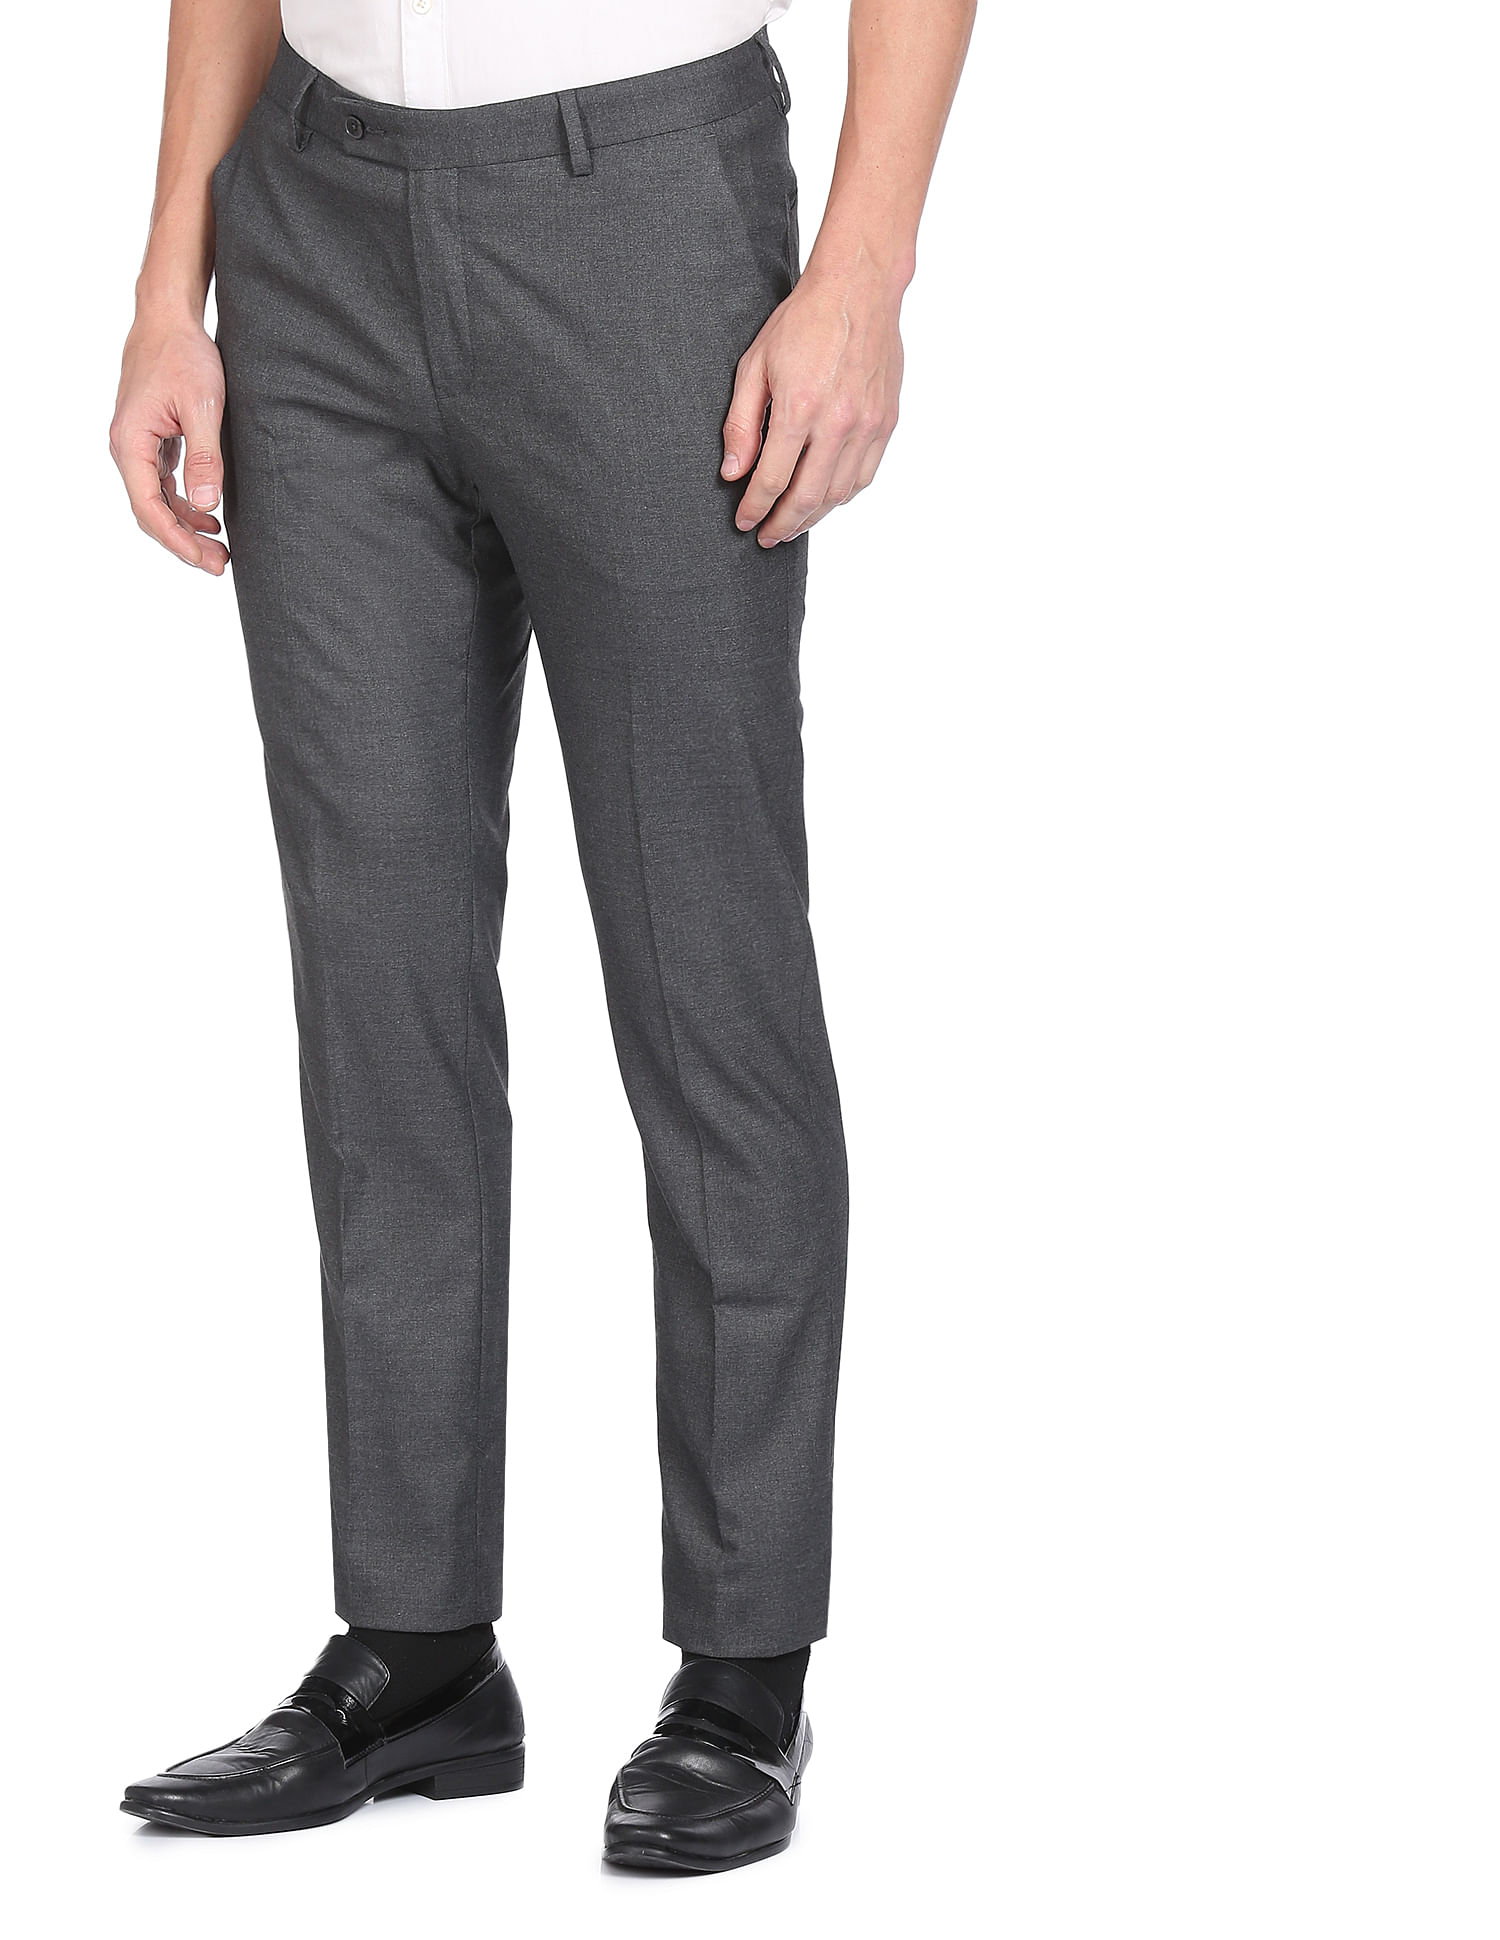 Polyester Viscose 2838 Inch Dark Grey Mens Formal Pant